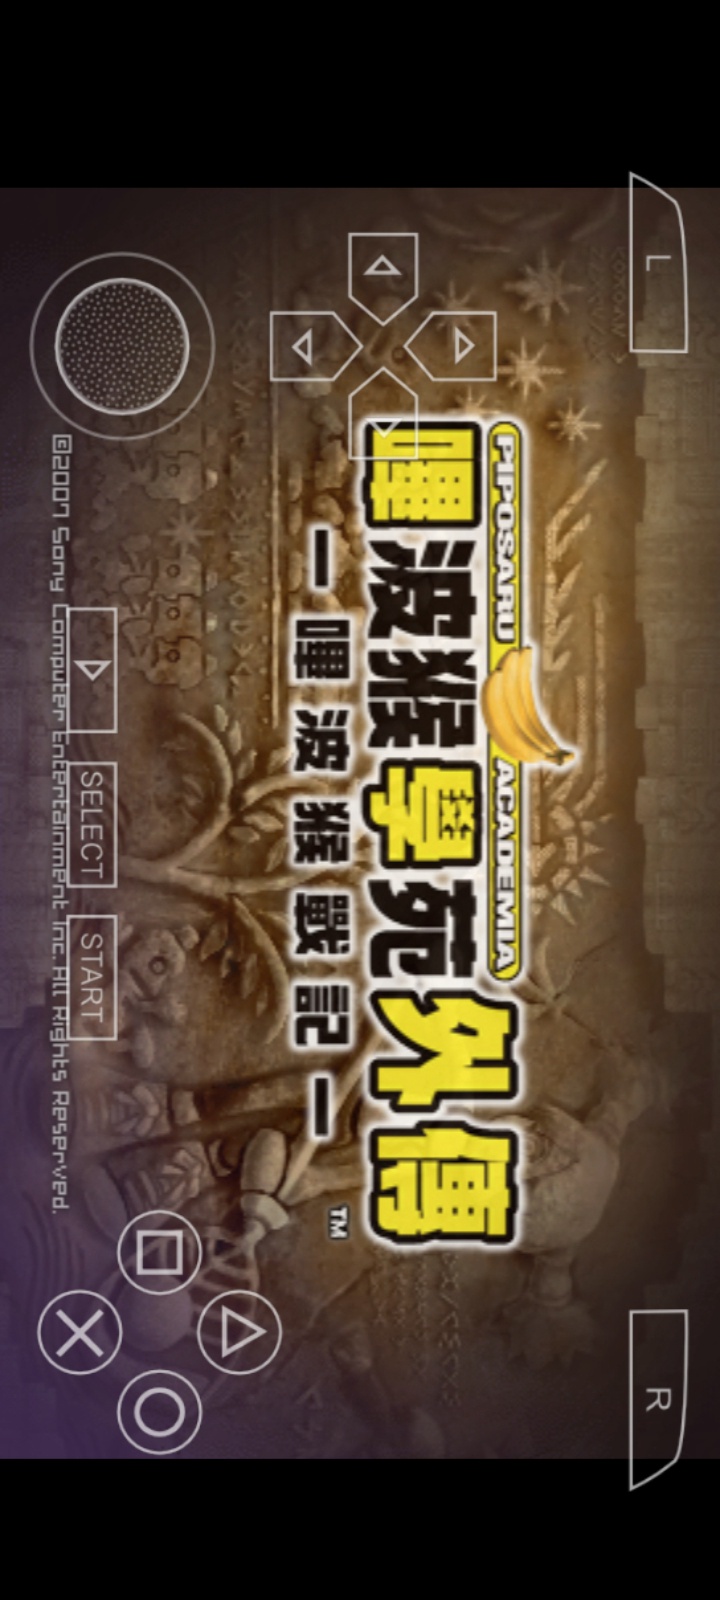 Catching monkeys: Bibo Monkey War Chinese version of the cracked version(PSP game porting)